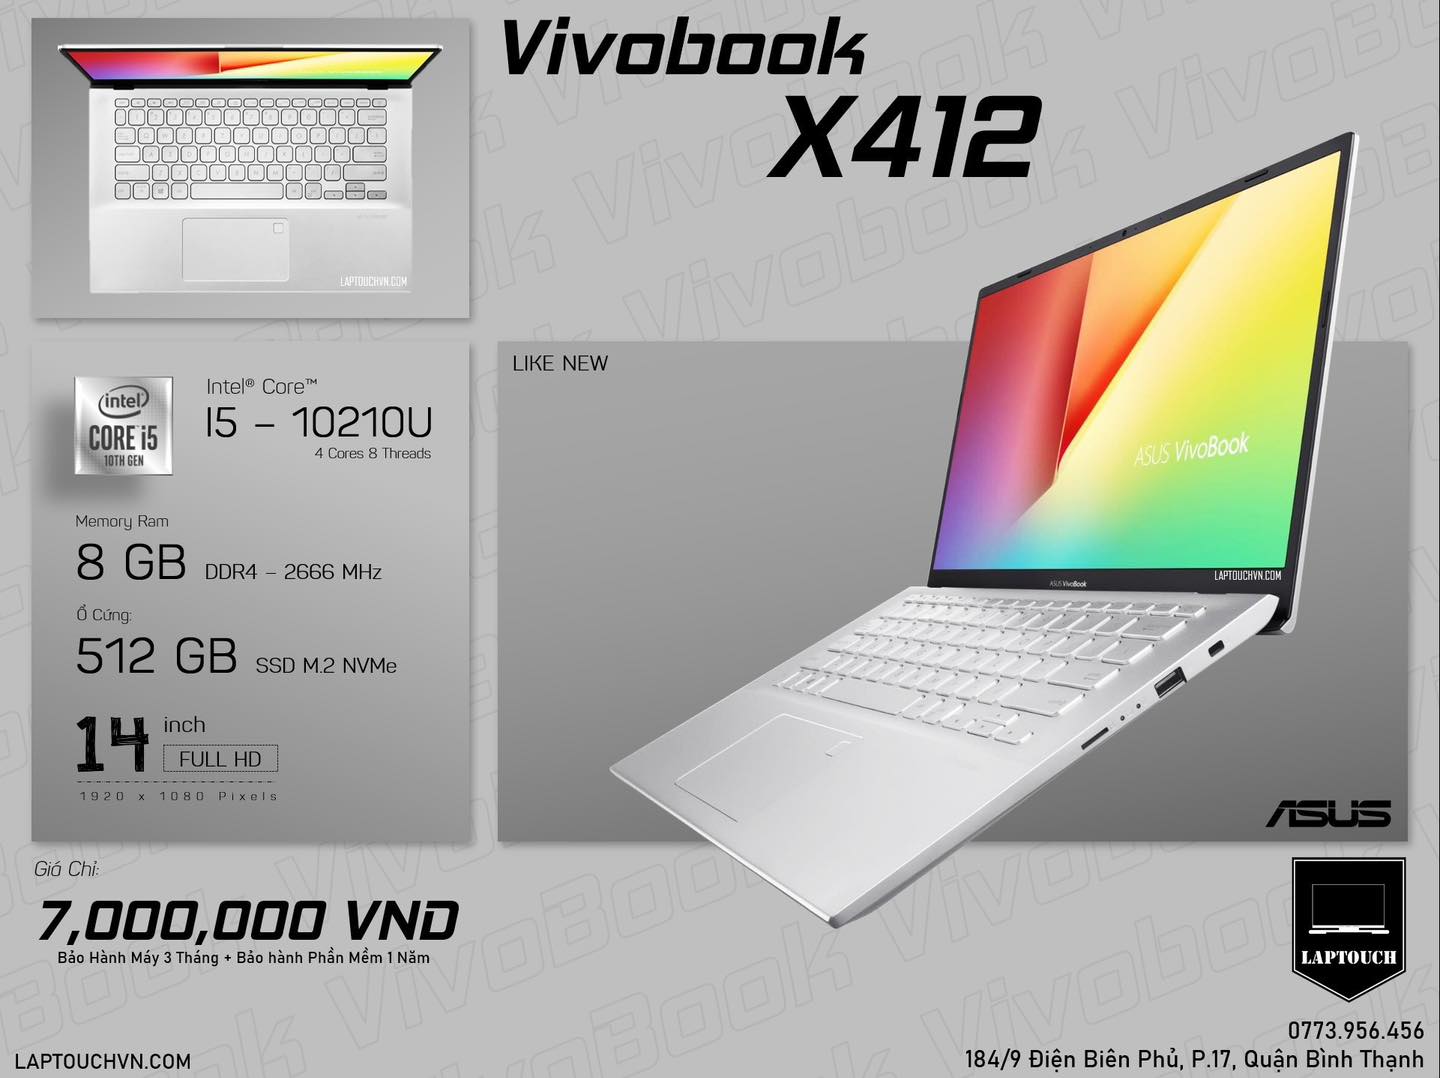 Asus Vivobook X412 [ Like New ]